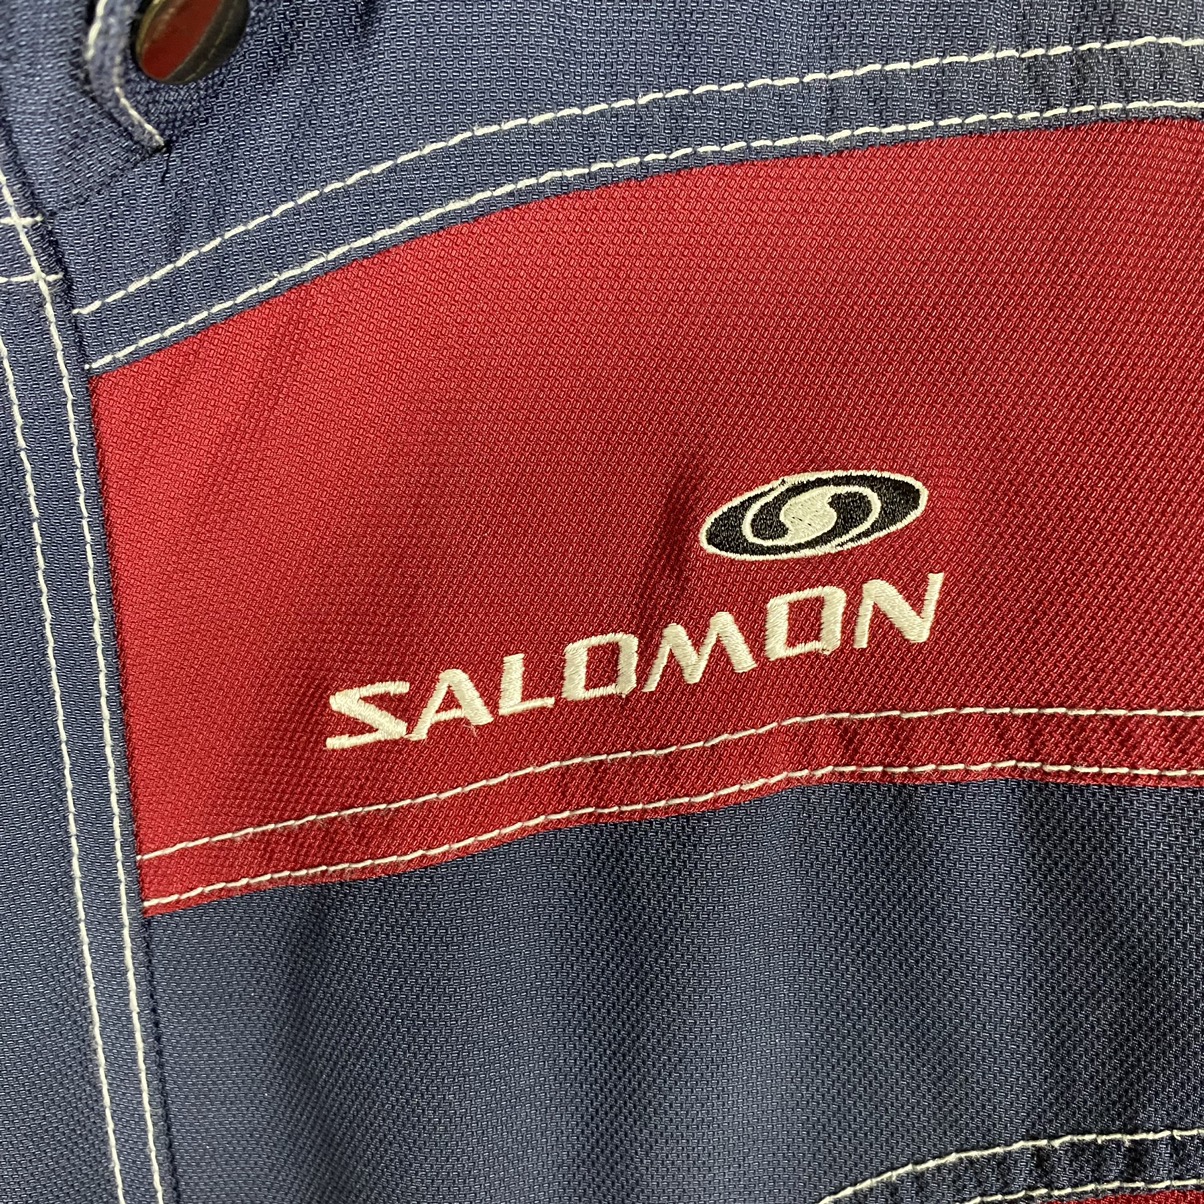 Vintage - Vintage Jacket Salmon S Size But To Fit M Size - 11